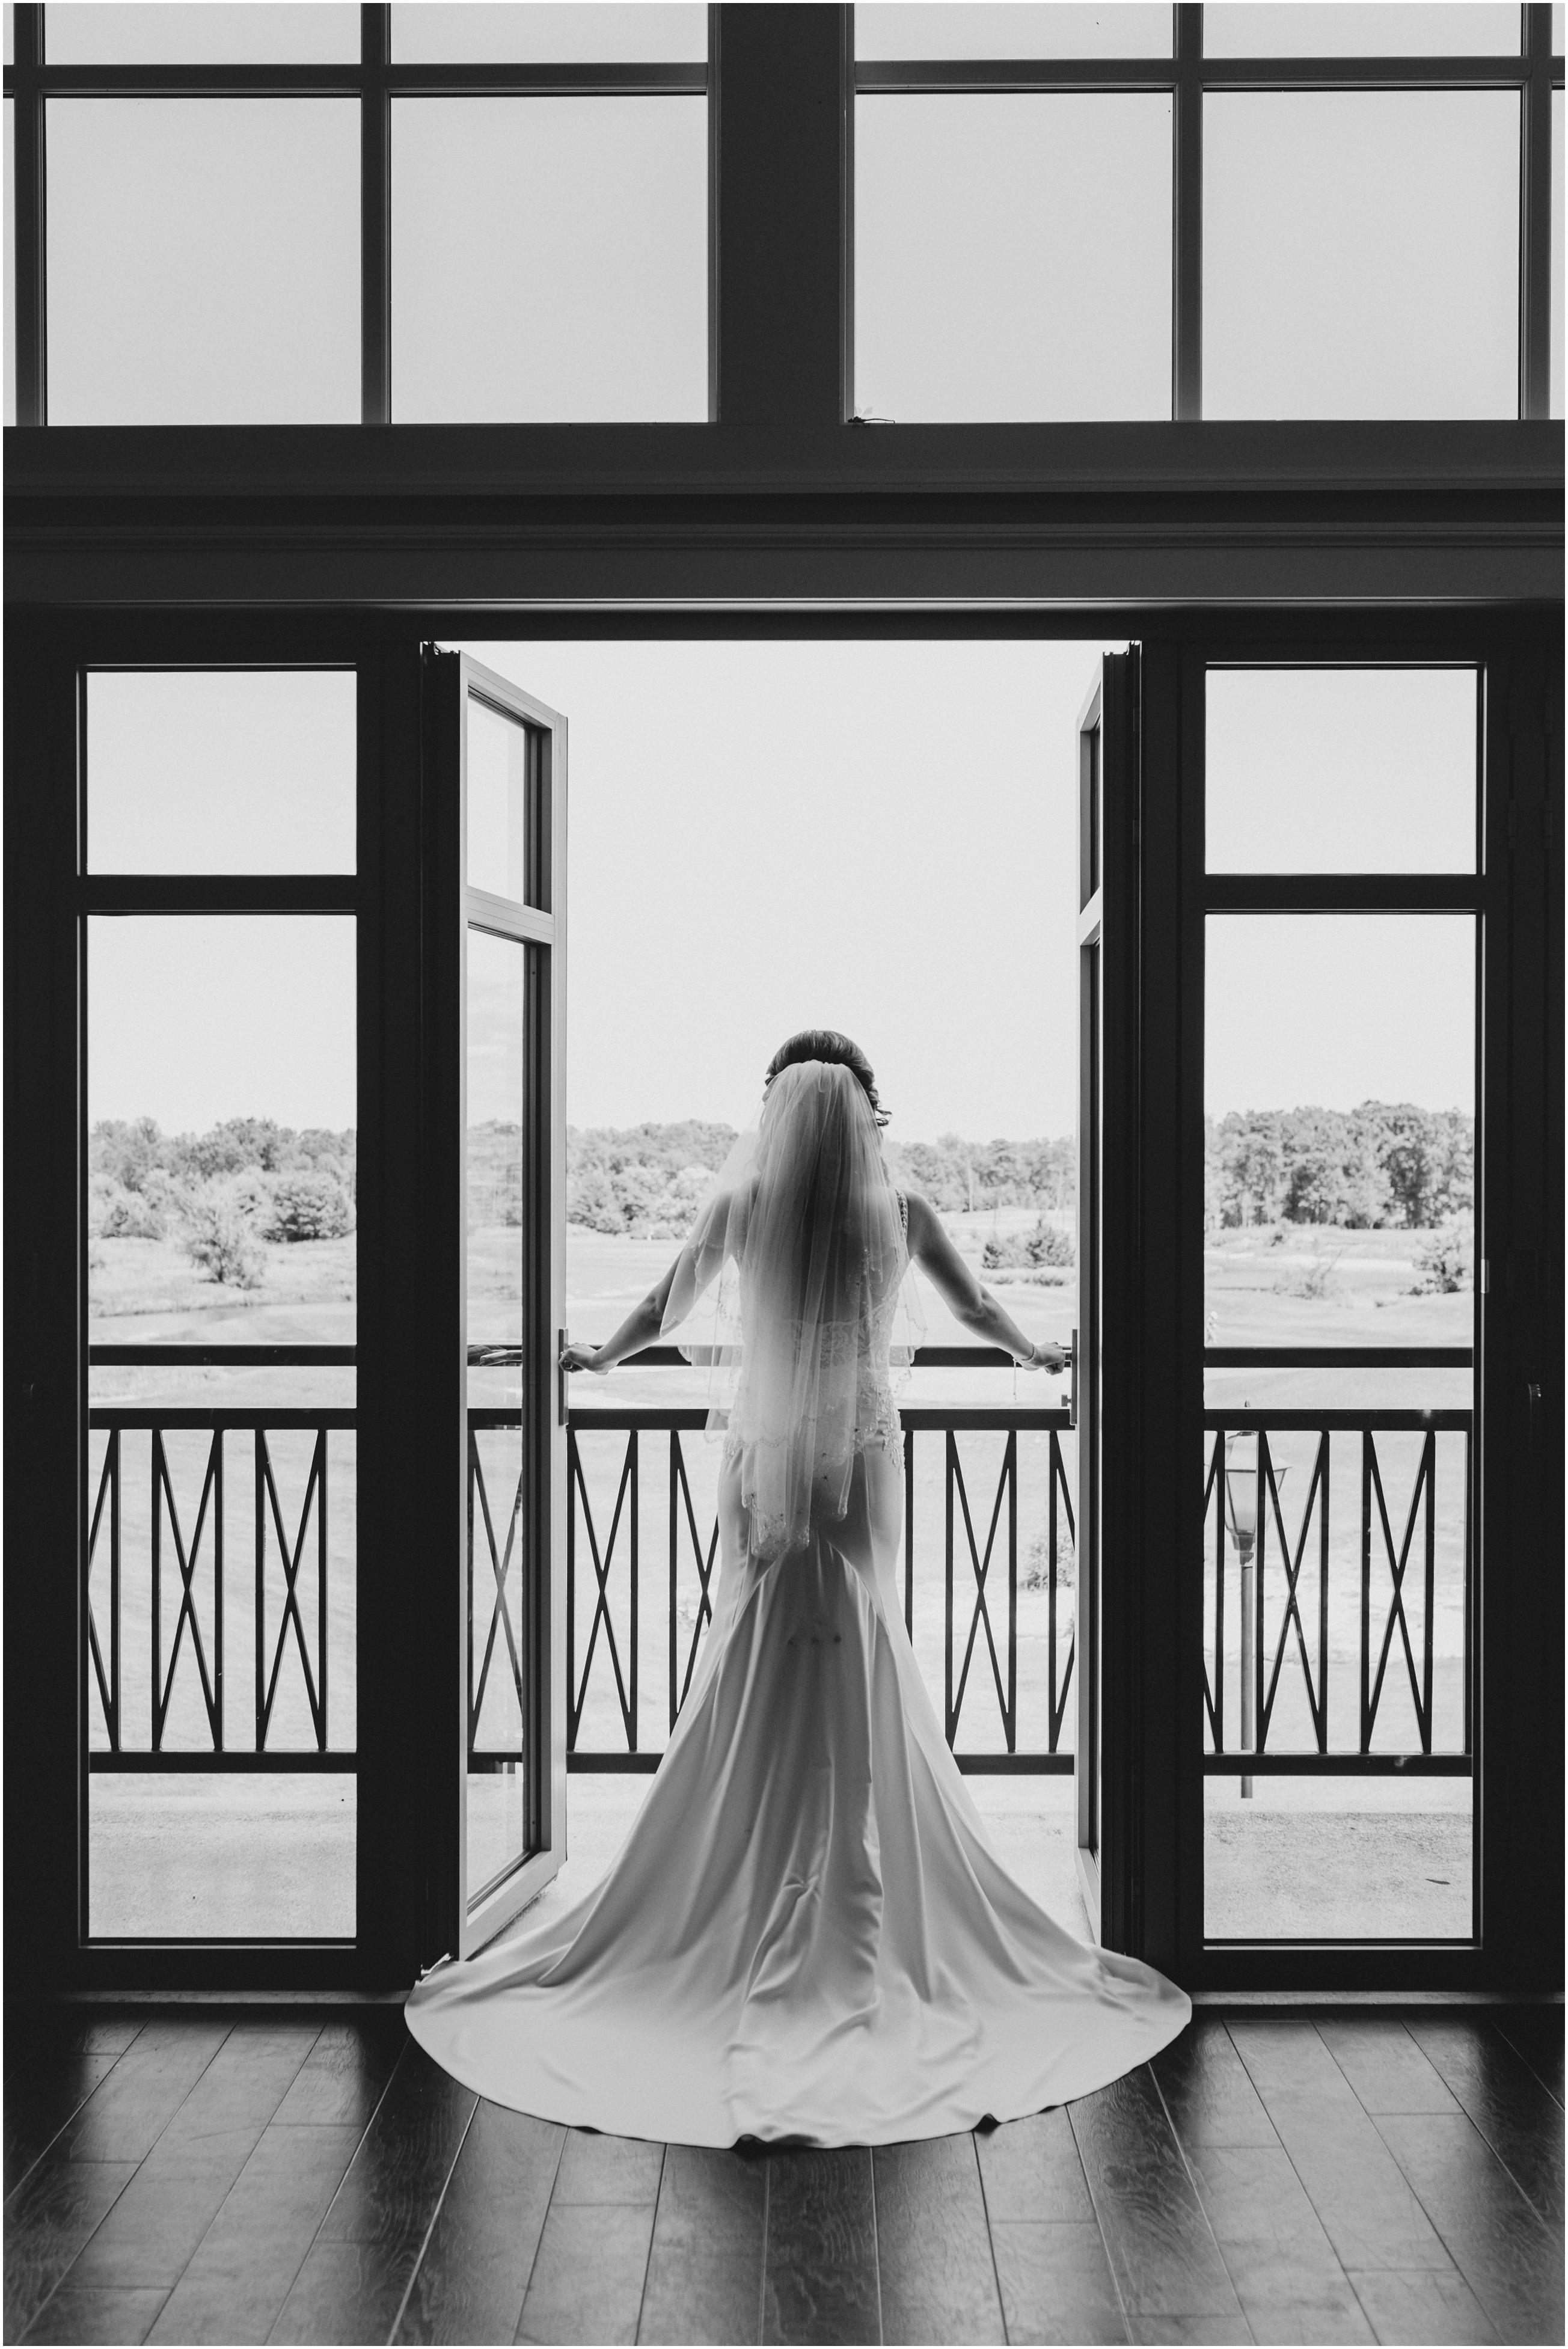 black and white silohuette image of bride